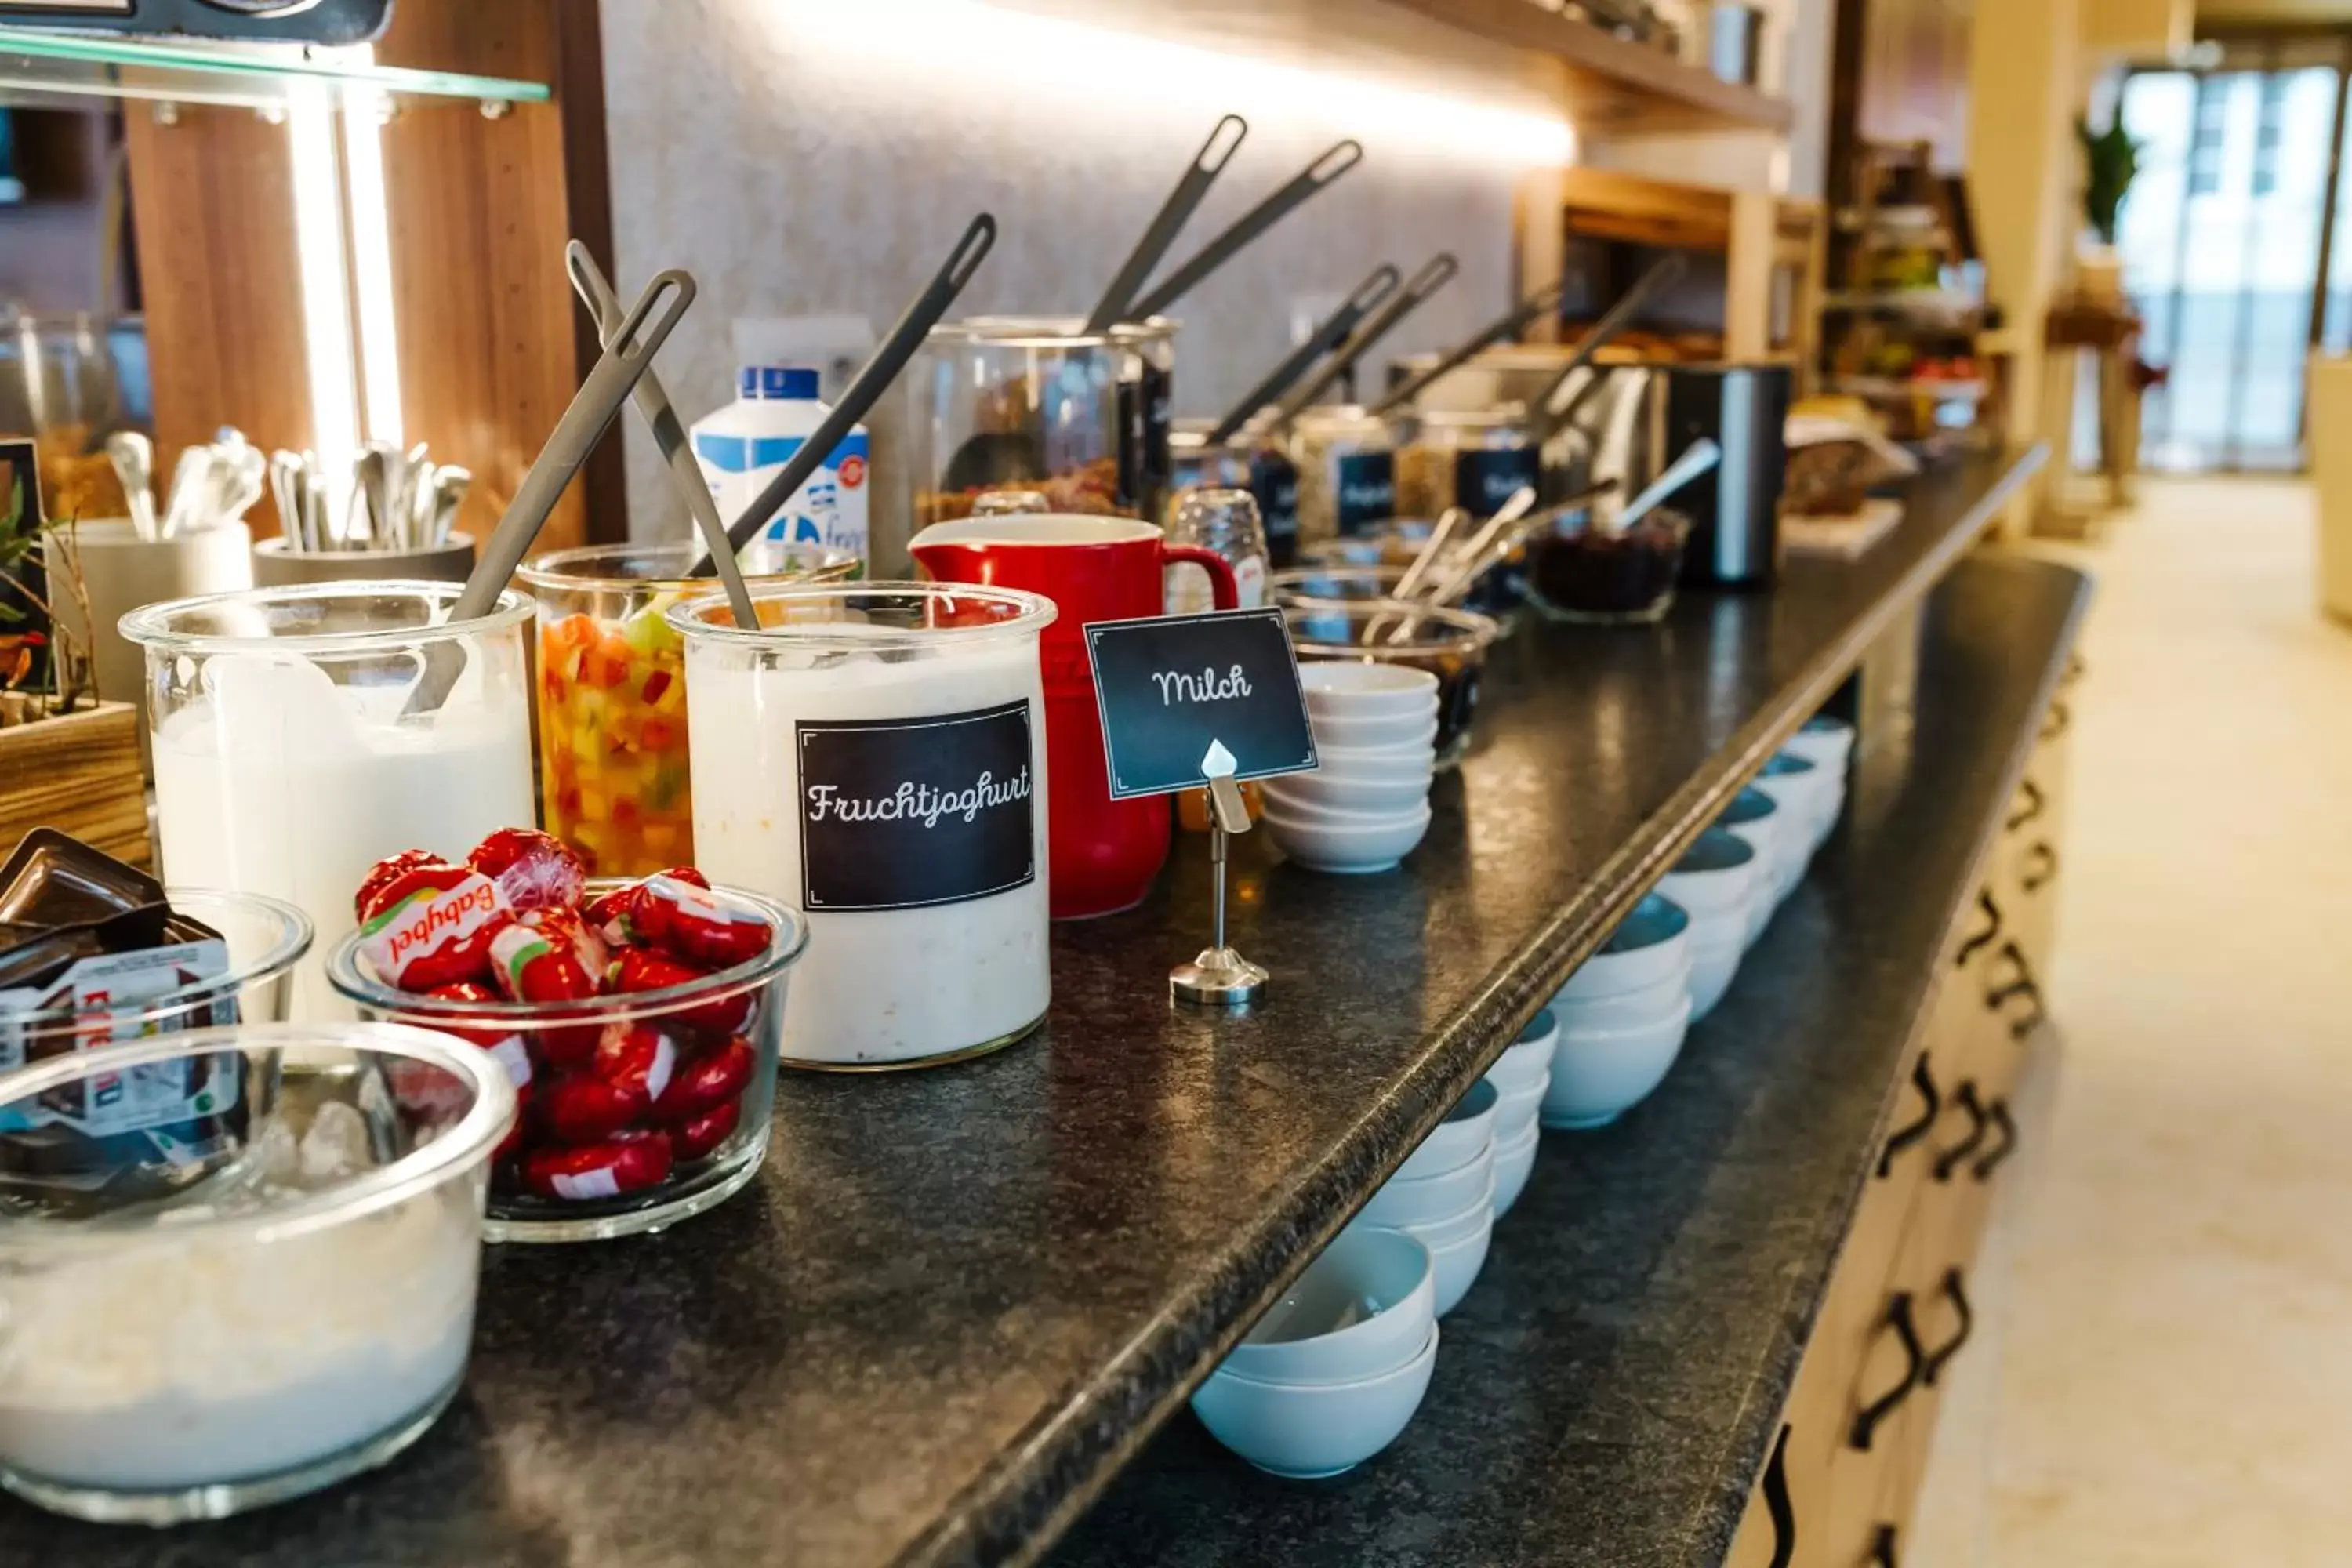 Buffet breakfast in Tinschert Hotel-Restaurant-Partyservice